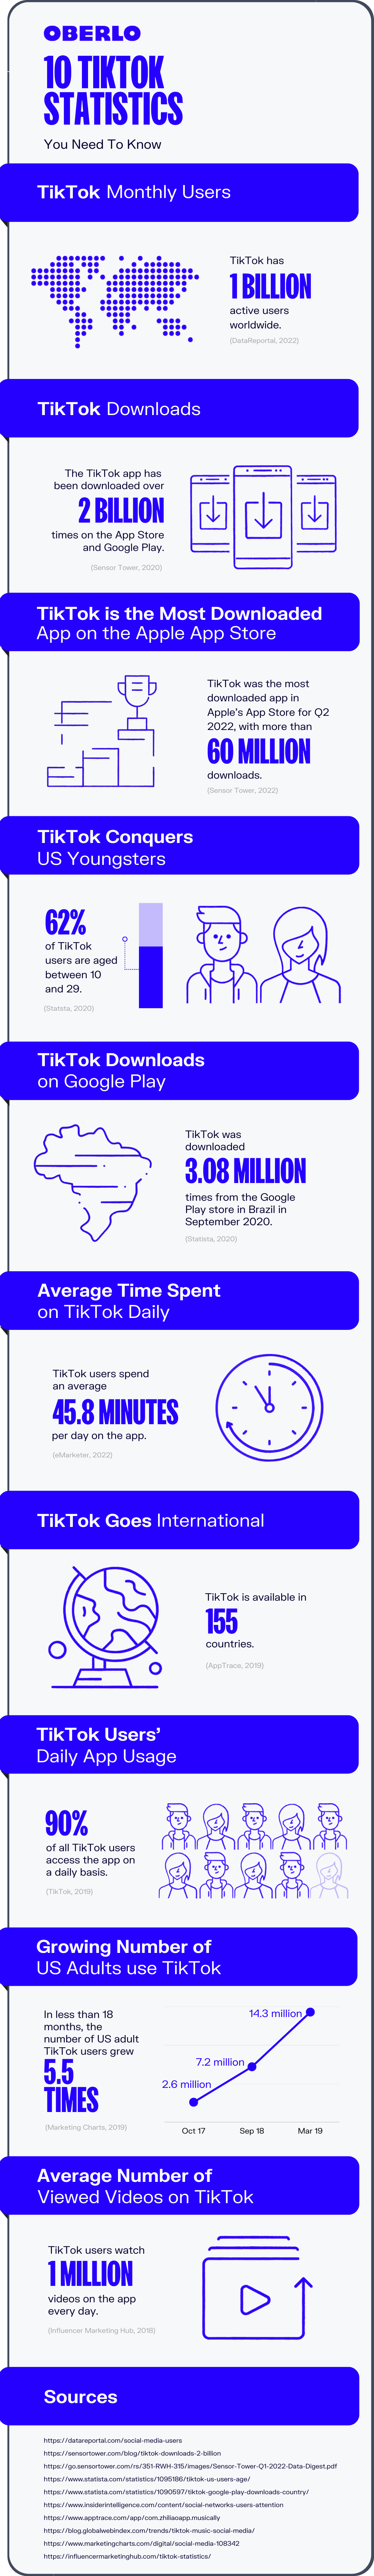 tiktok statistics full infographic